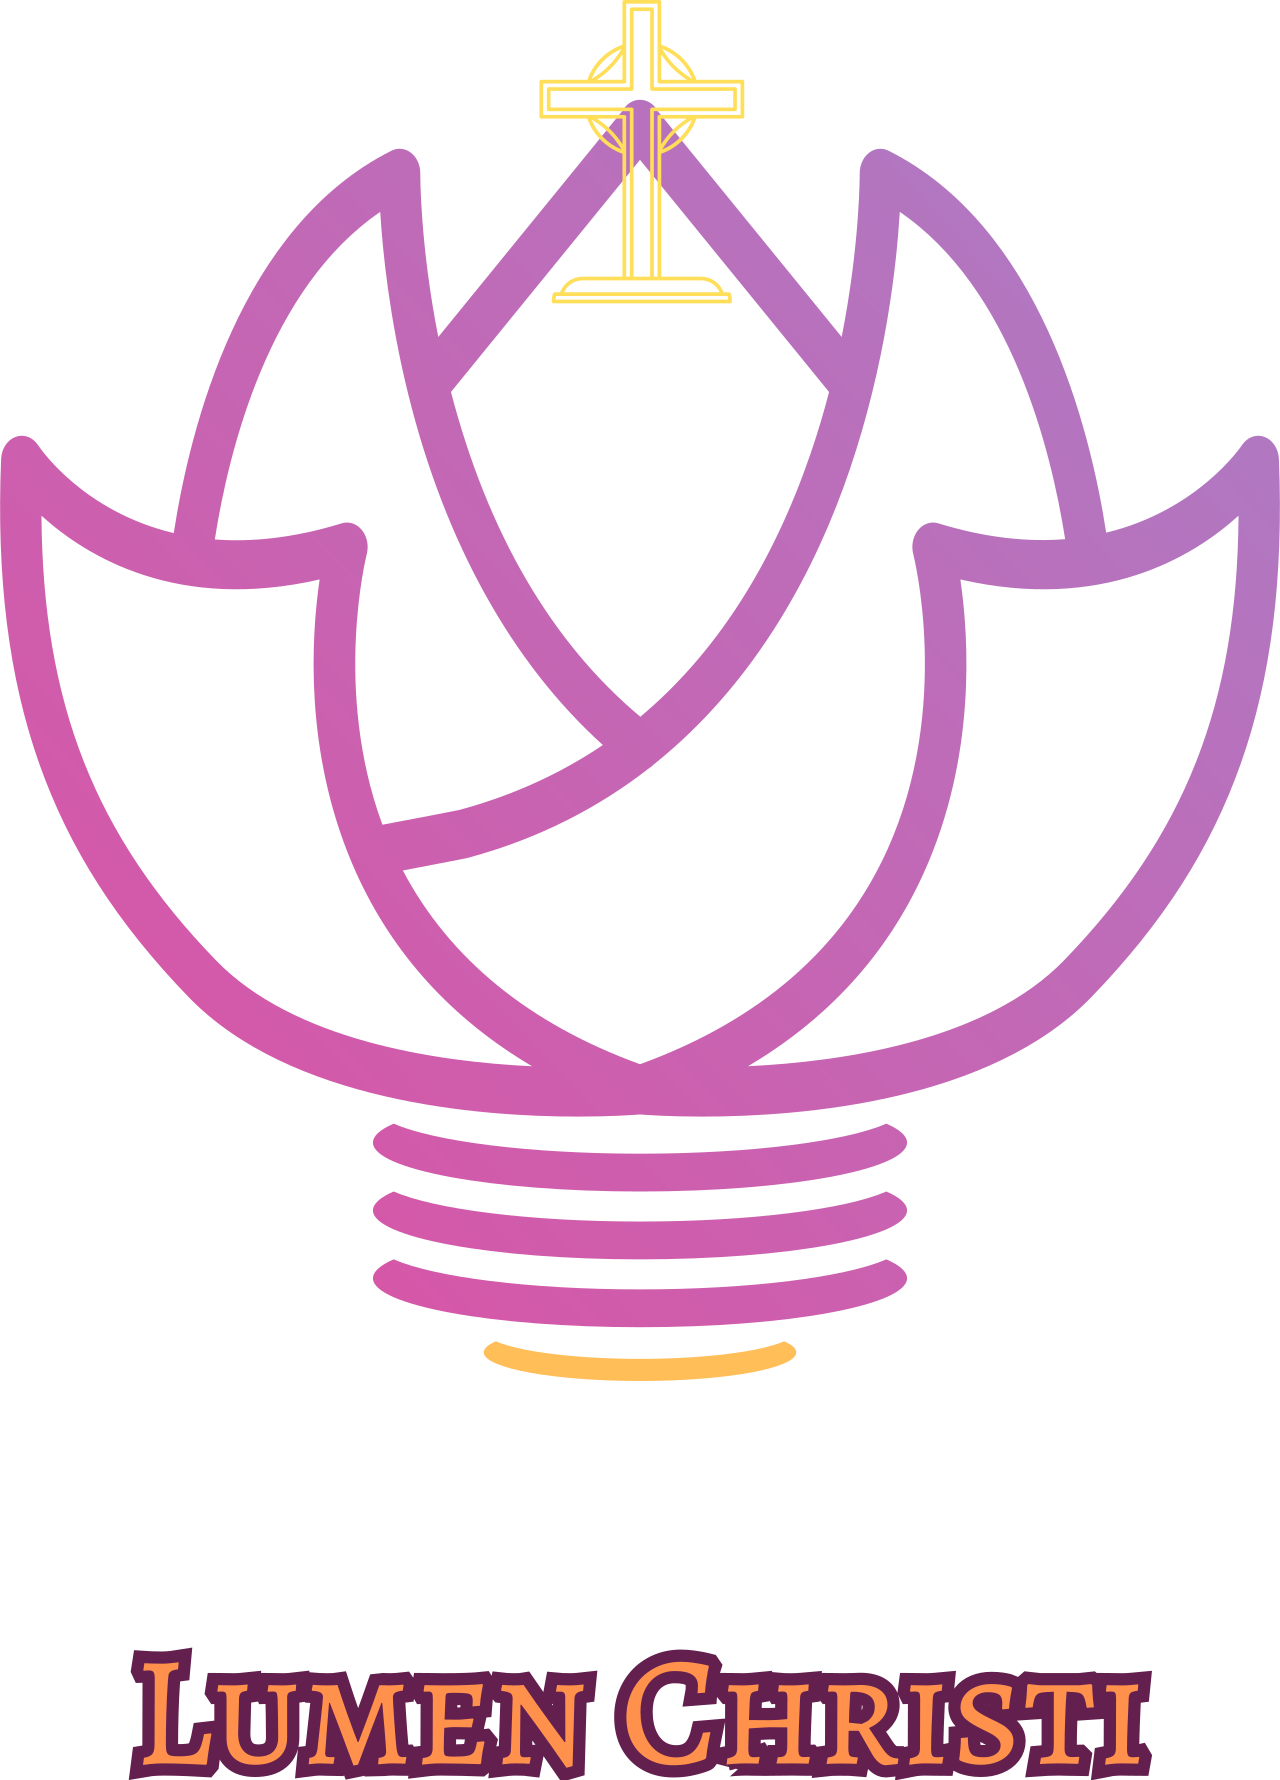 Lumen Christi's logo